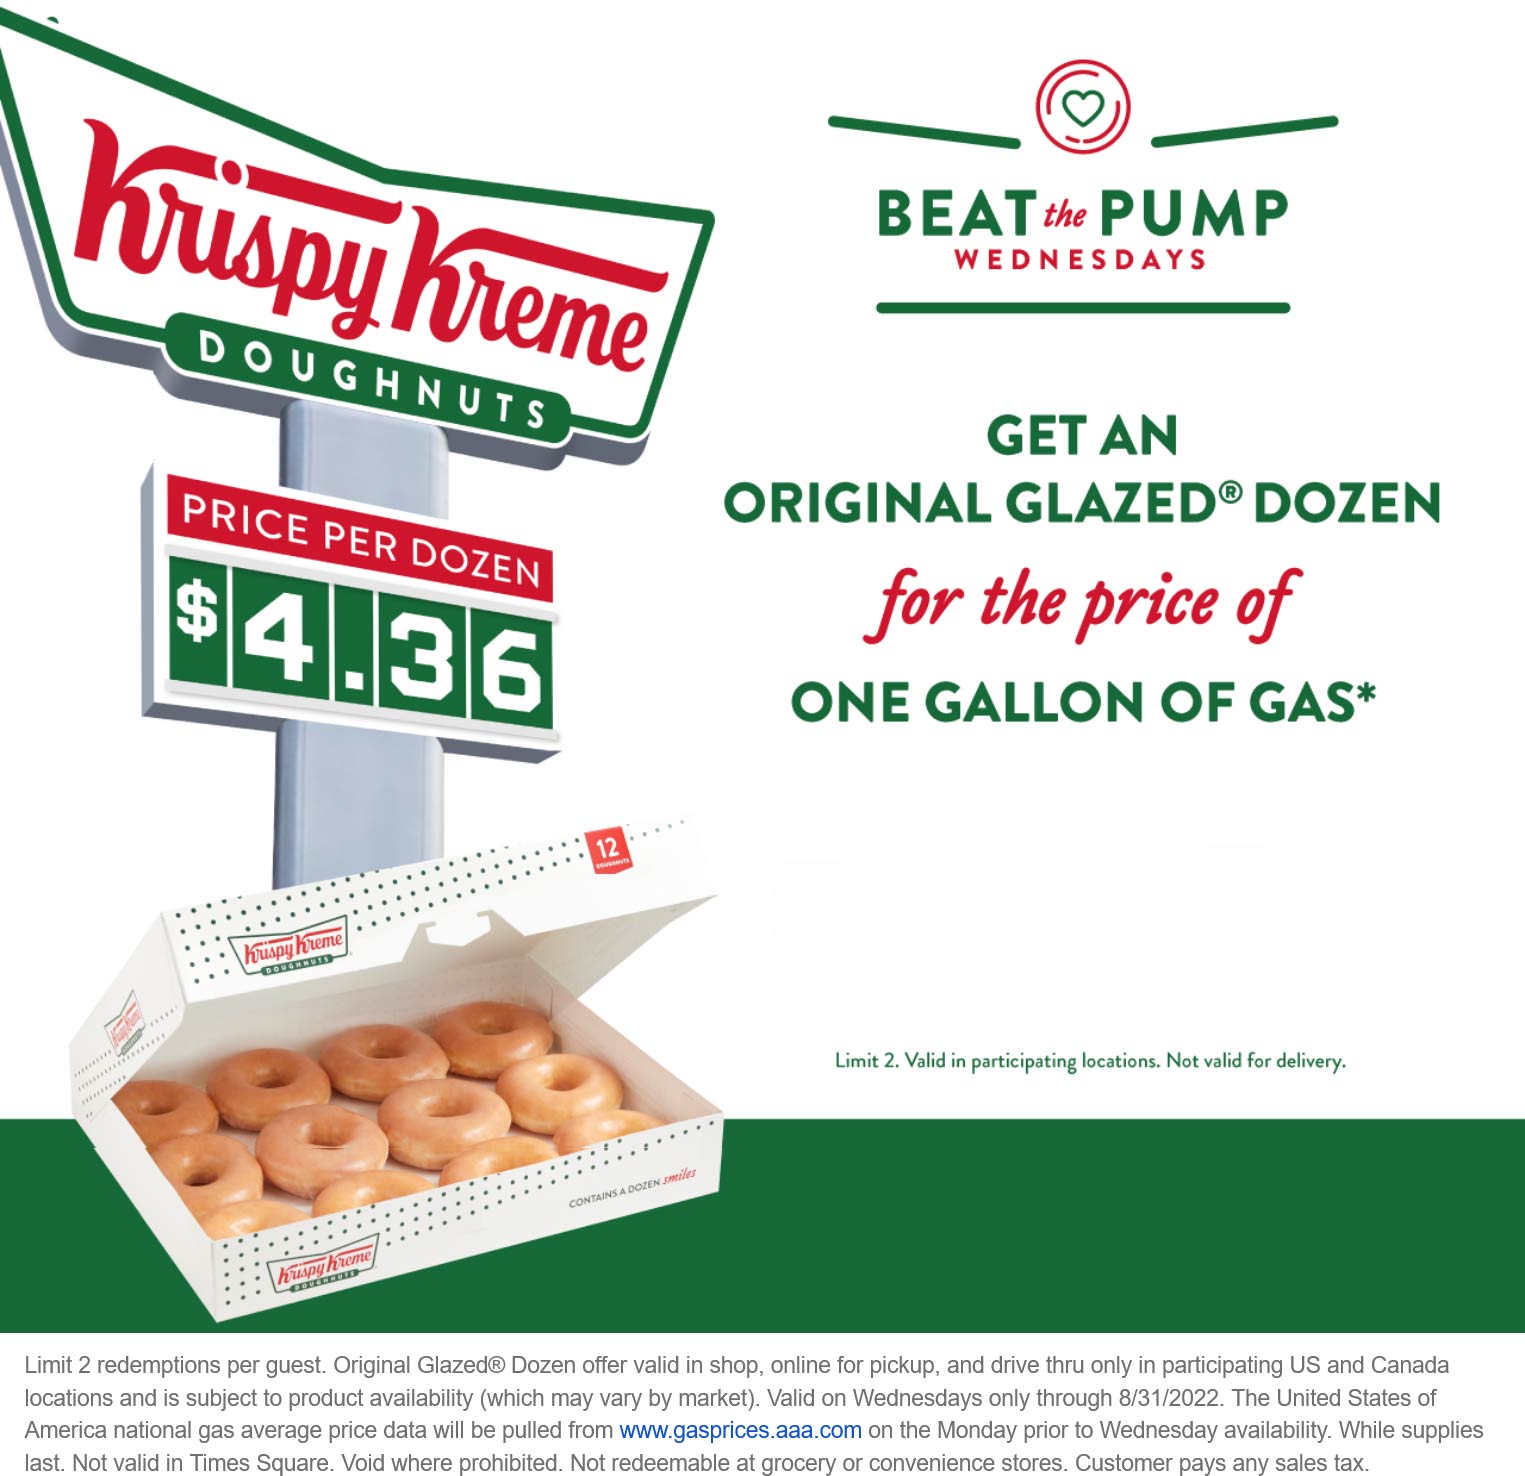 Krispy Kreme restaurants Coupon  $4.36 dozen doughnuts today at Krispy Kreme #krispykreme 